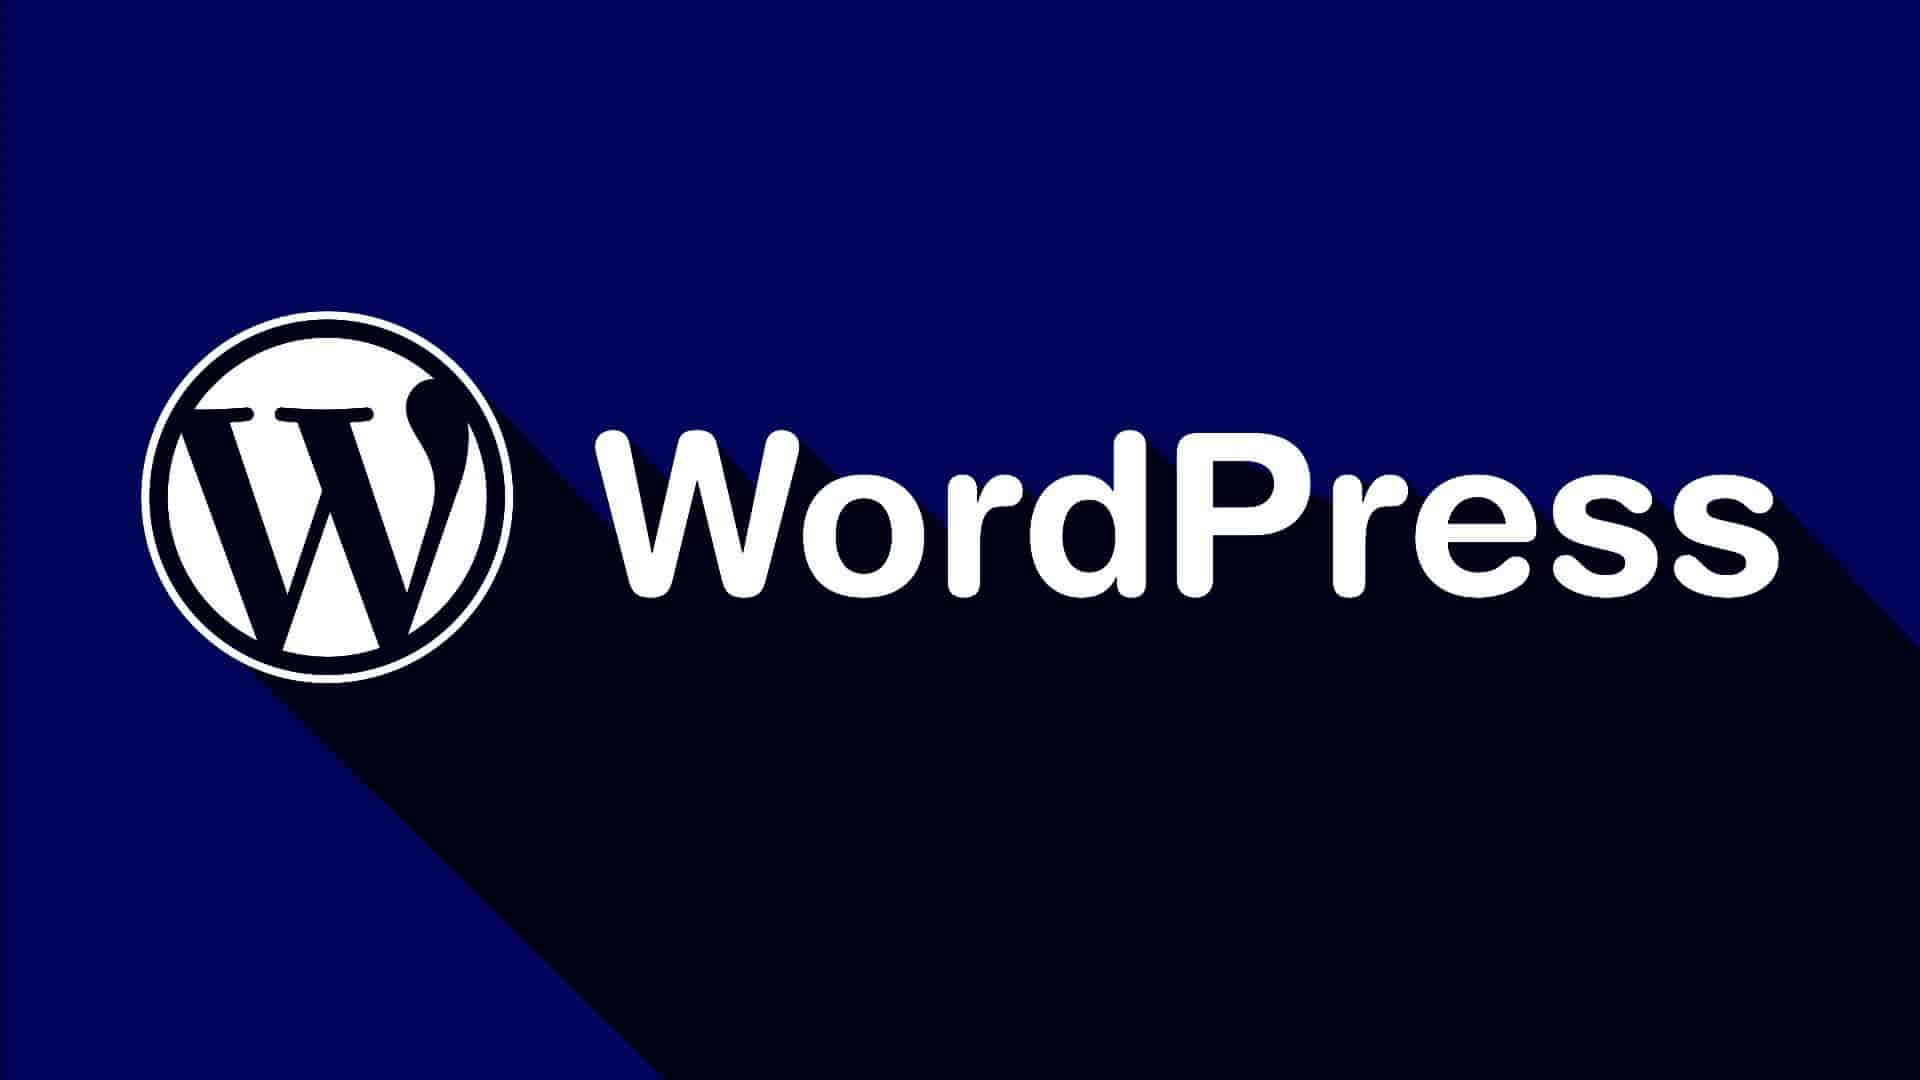 tutorial de wordpress acelerado